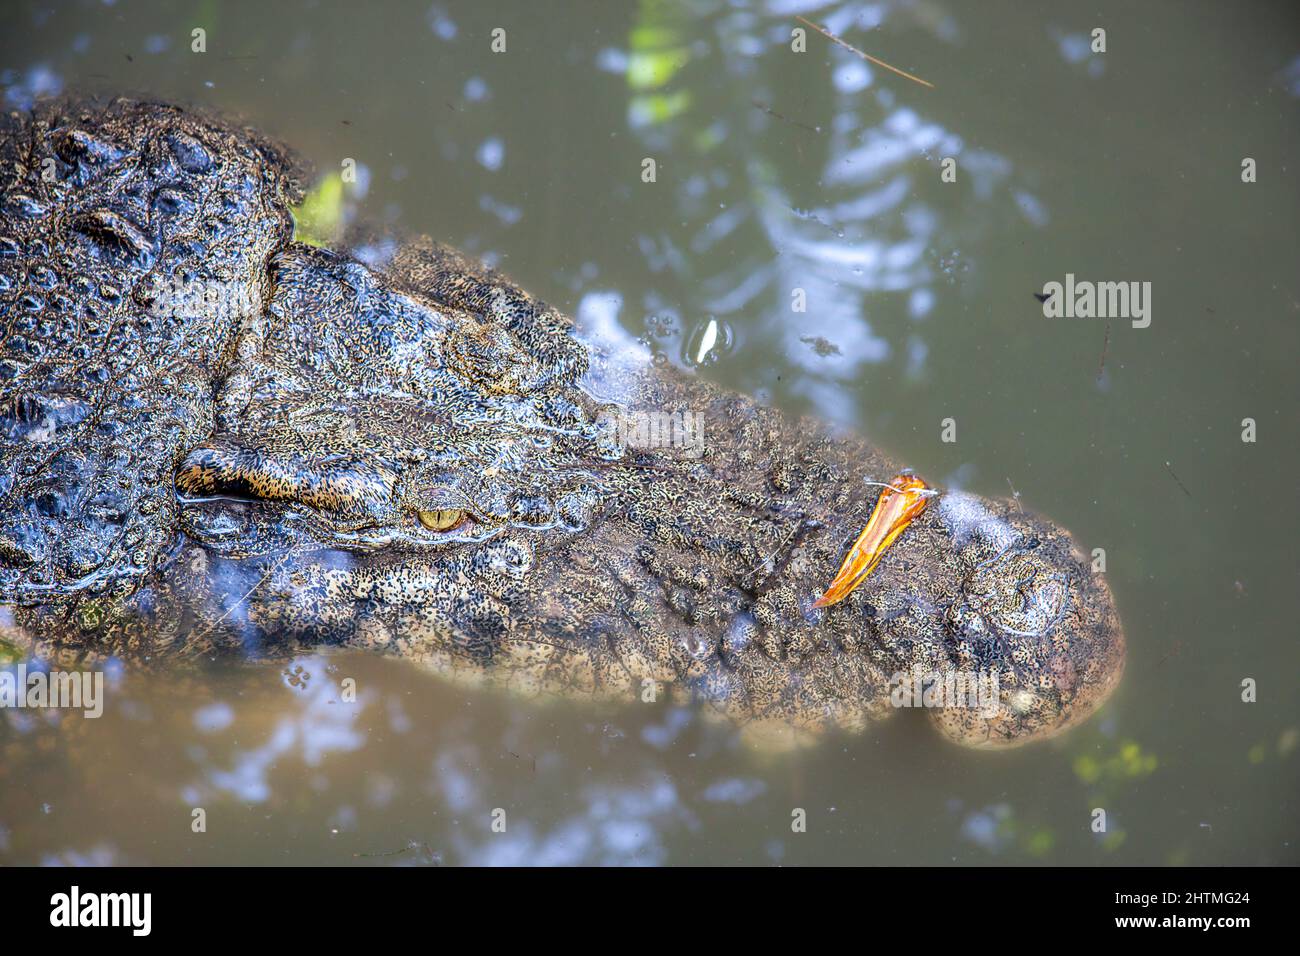 The saltwater crocodile, Crocodylus porosus, is sometimes referred to as an estuarine crocodile, Indonesia. Stock Photo